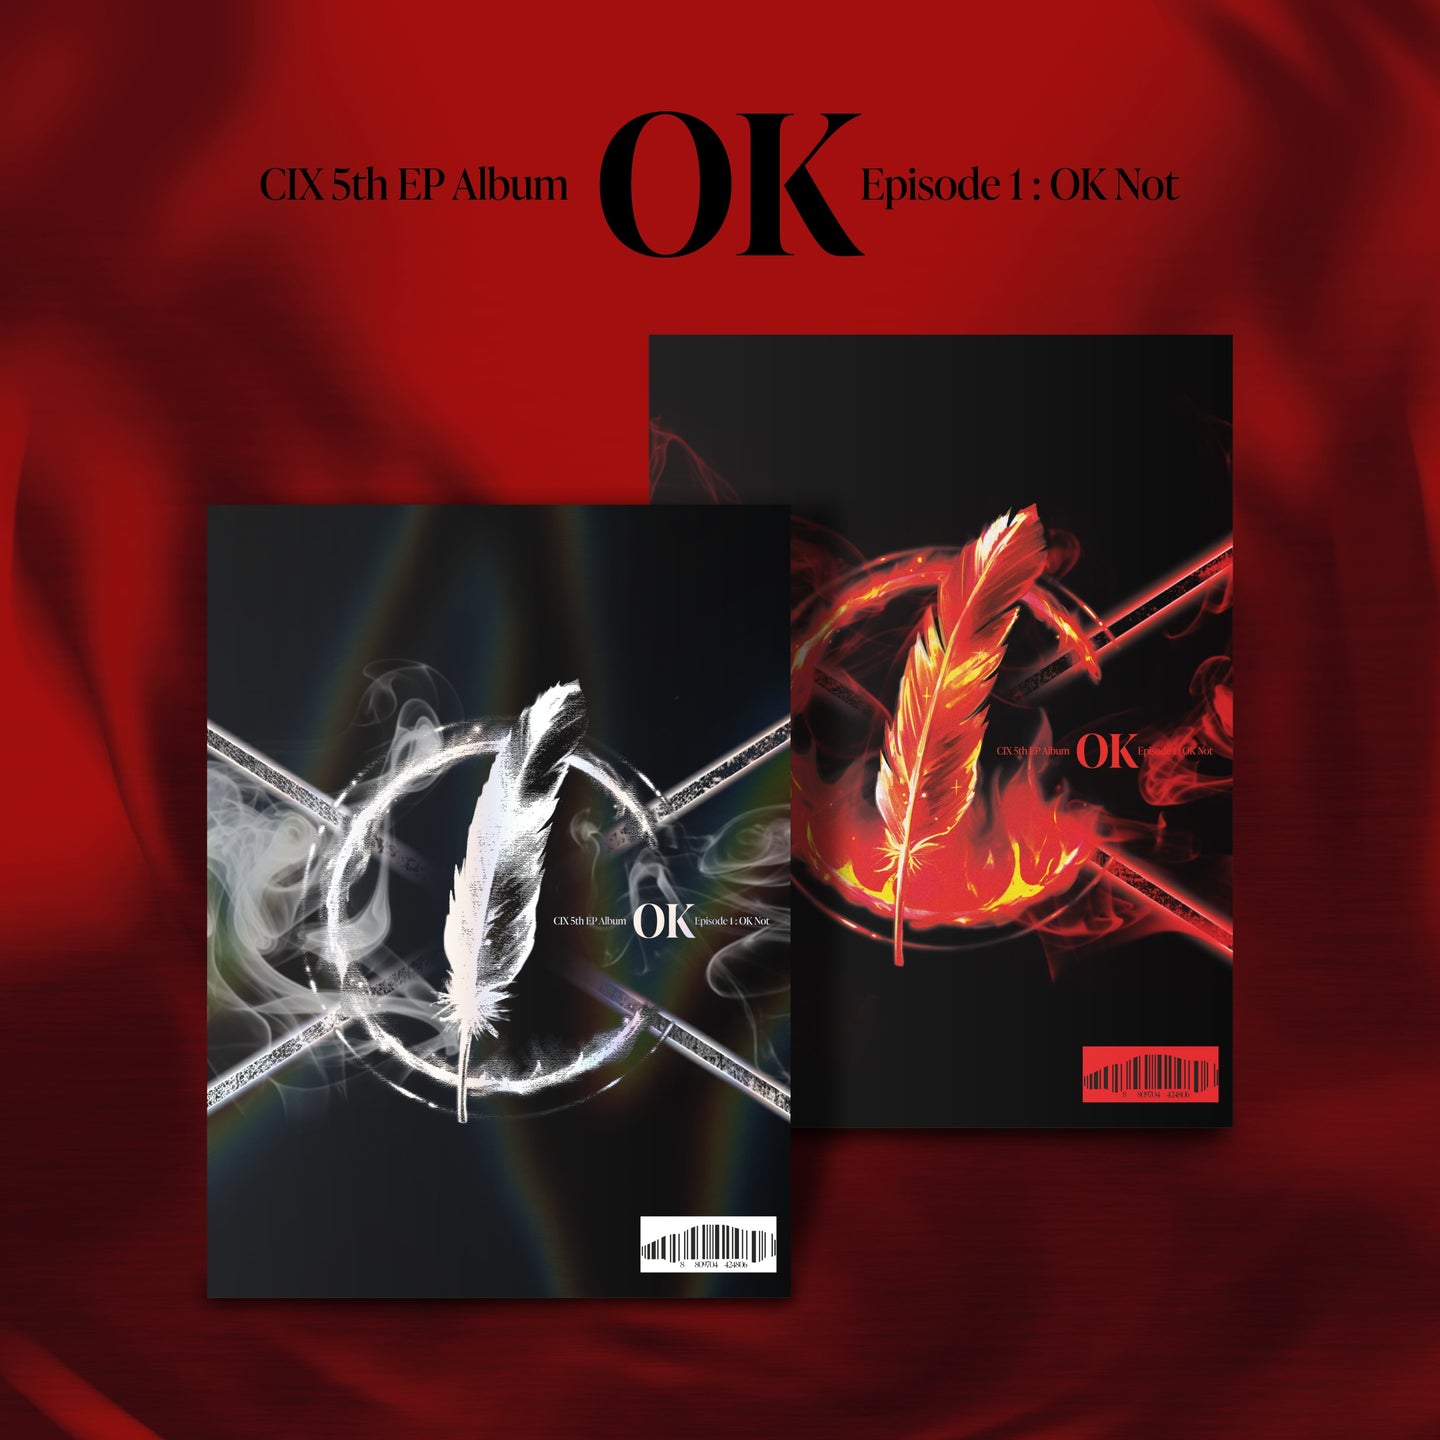 CIX EP Album Vol. 5 - 'OK' Episode 1 : OK Not (Random)